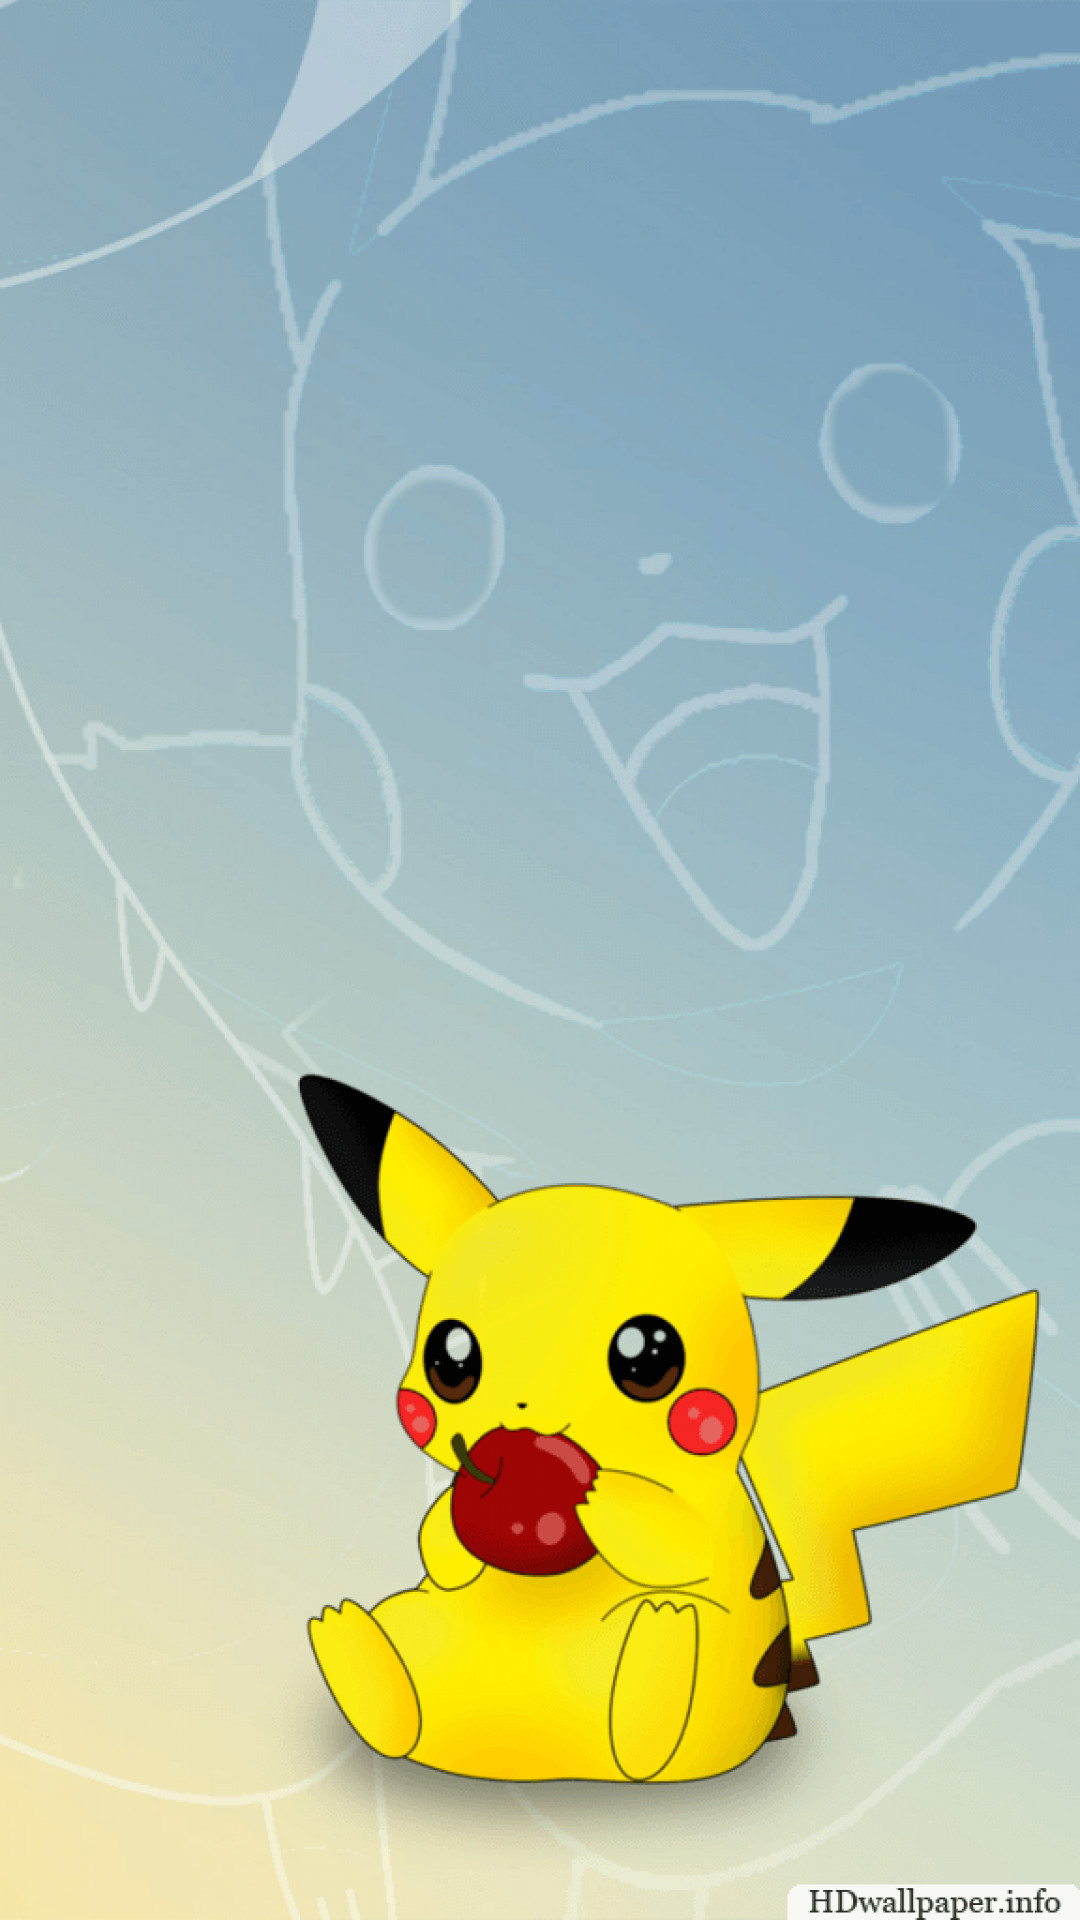 1080x1920 pikachu wallpaper iphone 6 plus